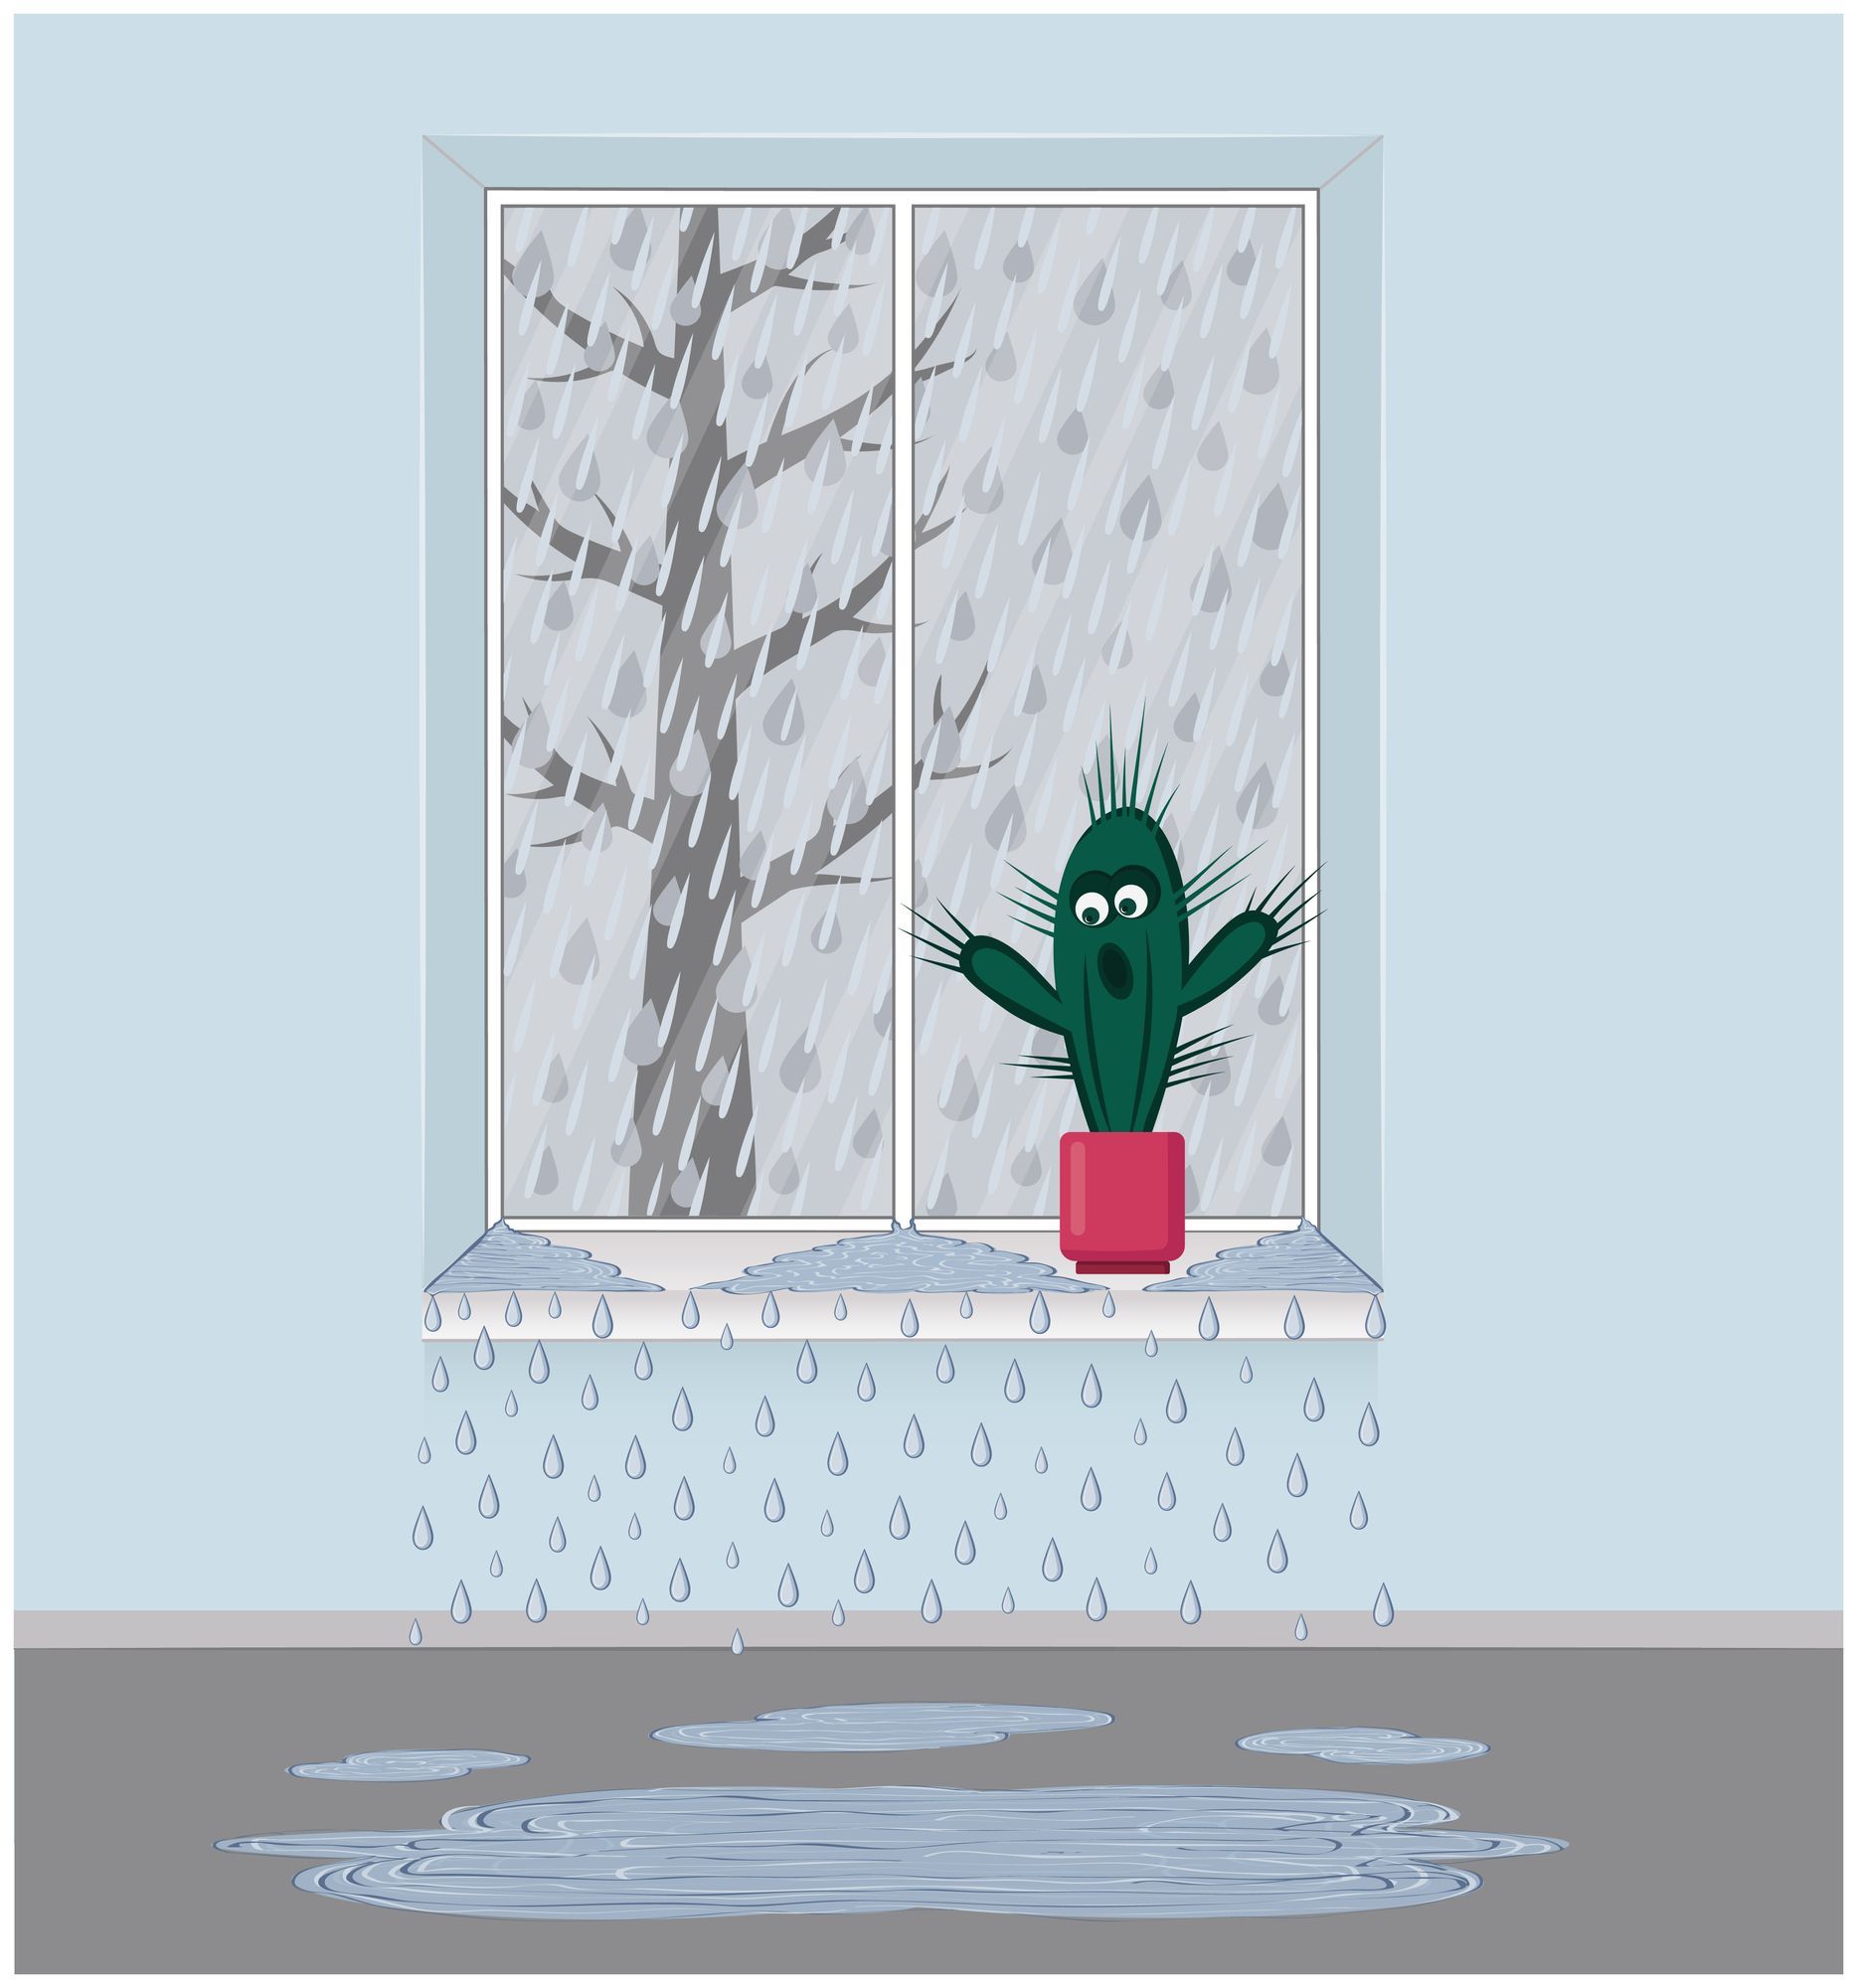 Water Damage to Windows: The Impact of Heavy Rain